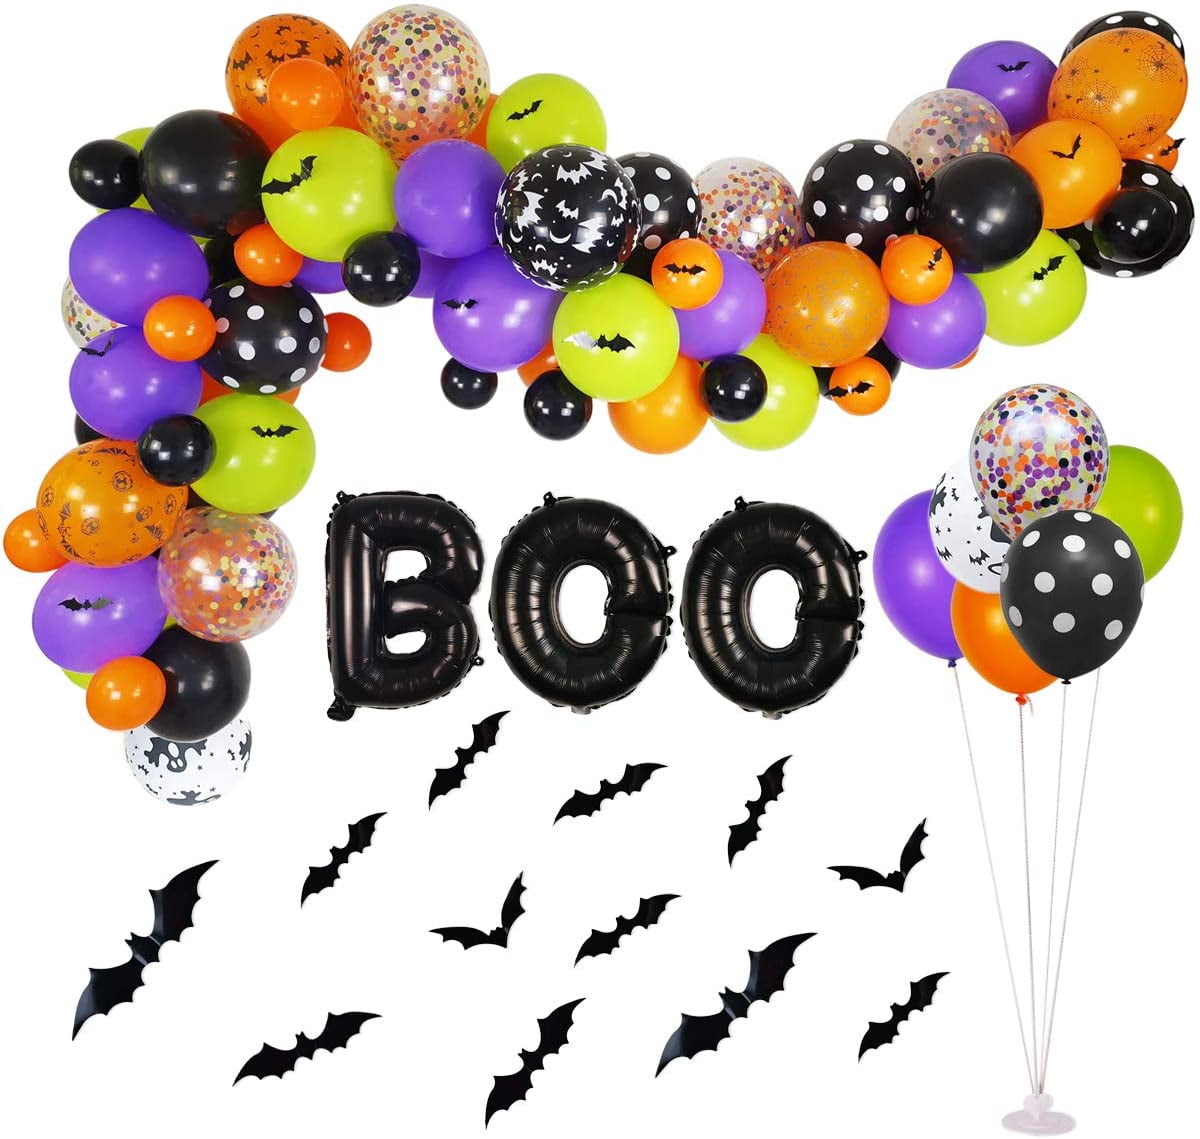 100 Pcs Halloween Balloons 5 Inch Mini Black/Orange Balloons Halloween Decorative Latex Party Balloons Small Balloons Helium Balloons for Birthday Party Anniversary Festival Halloween Decorations